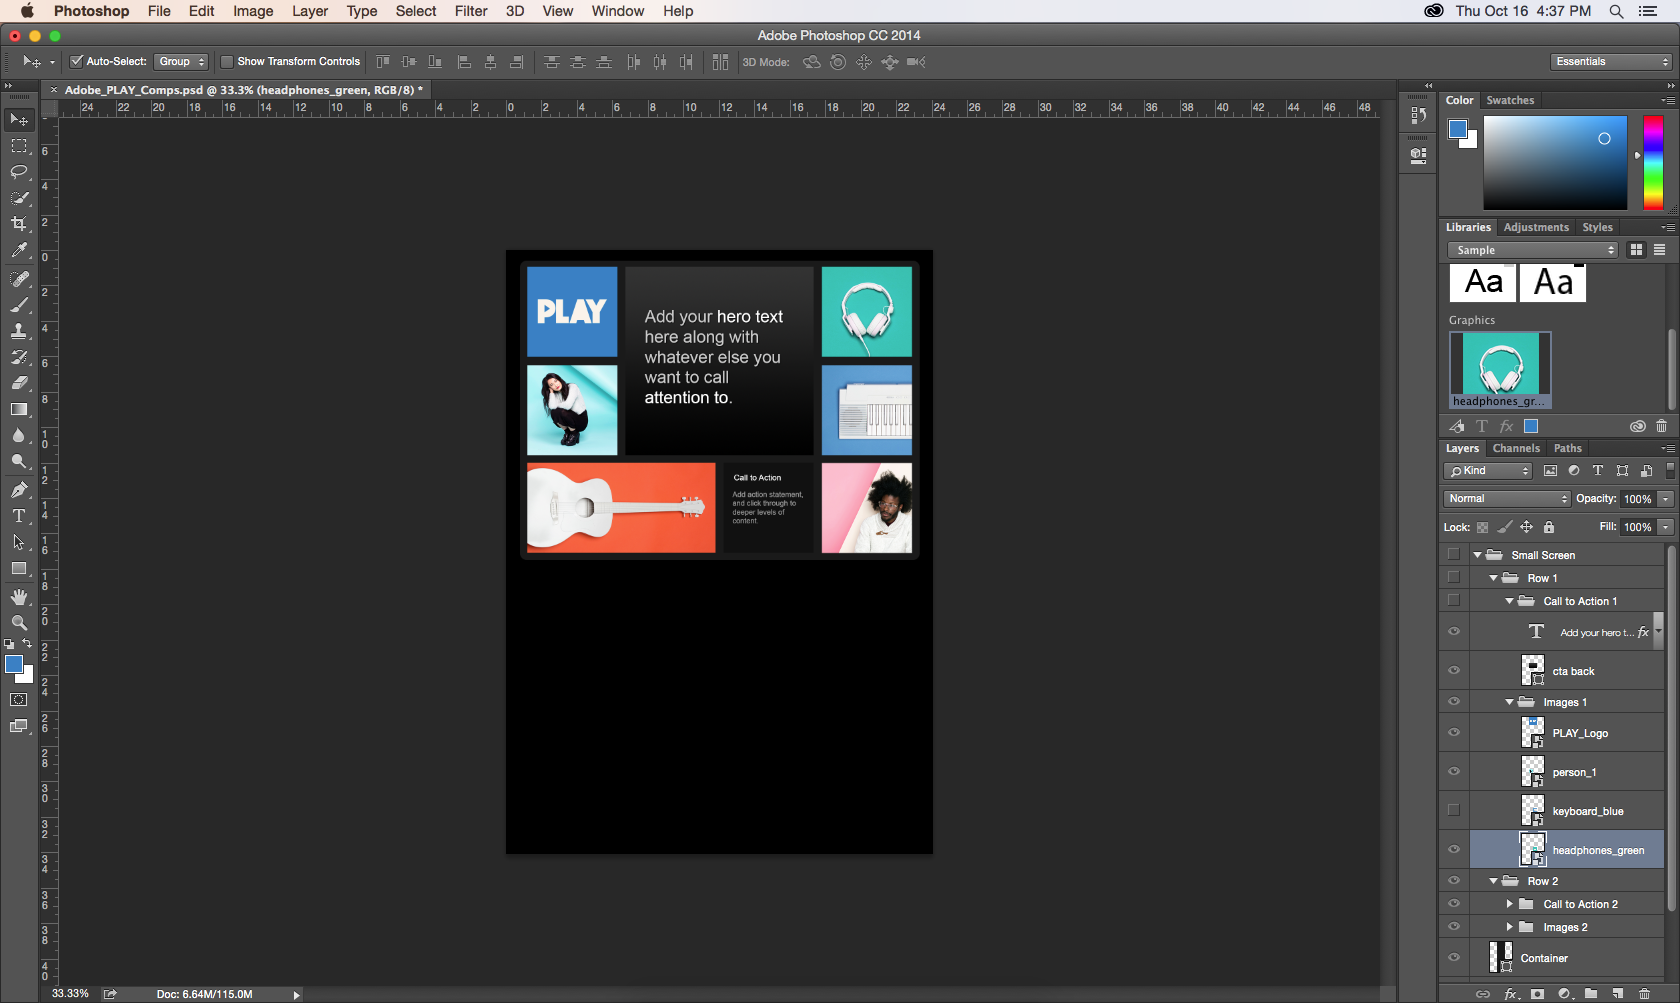 Adobe Photoshop CC 2014 for Mac Workspace (2014)